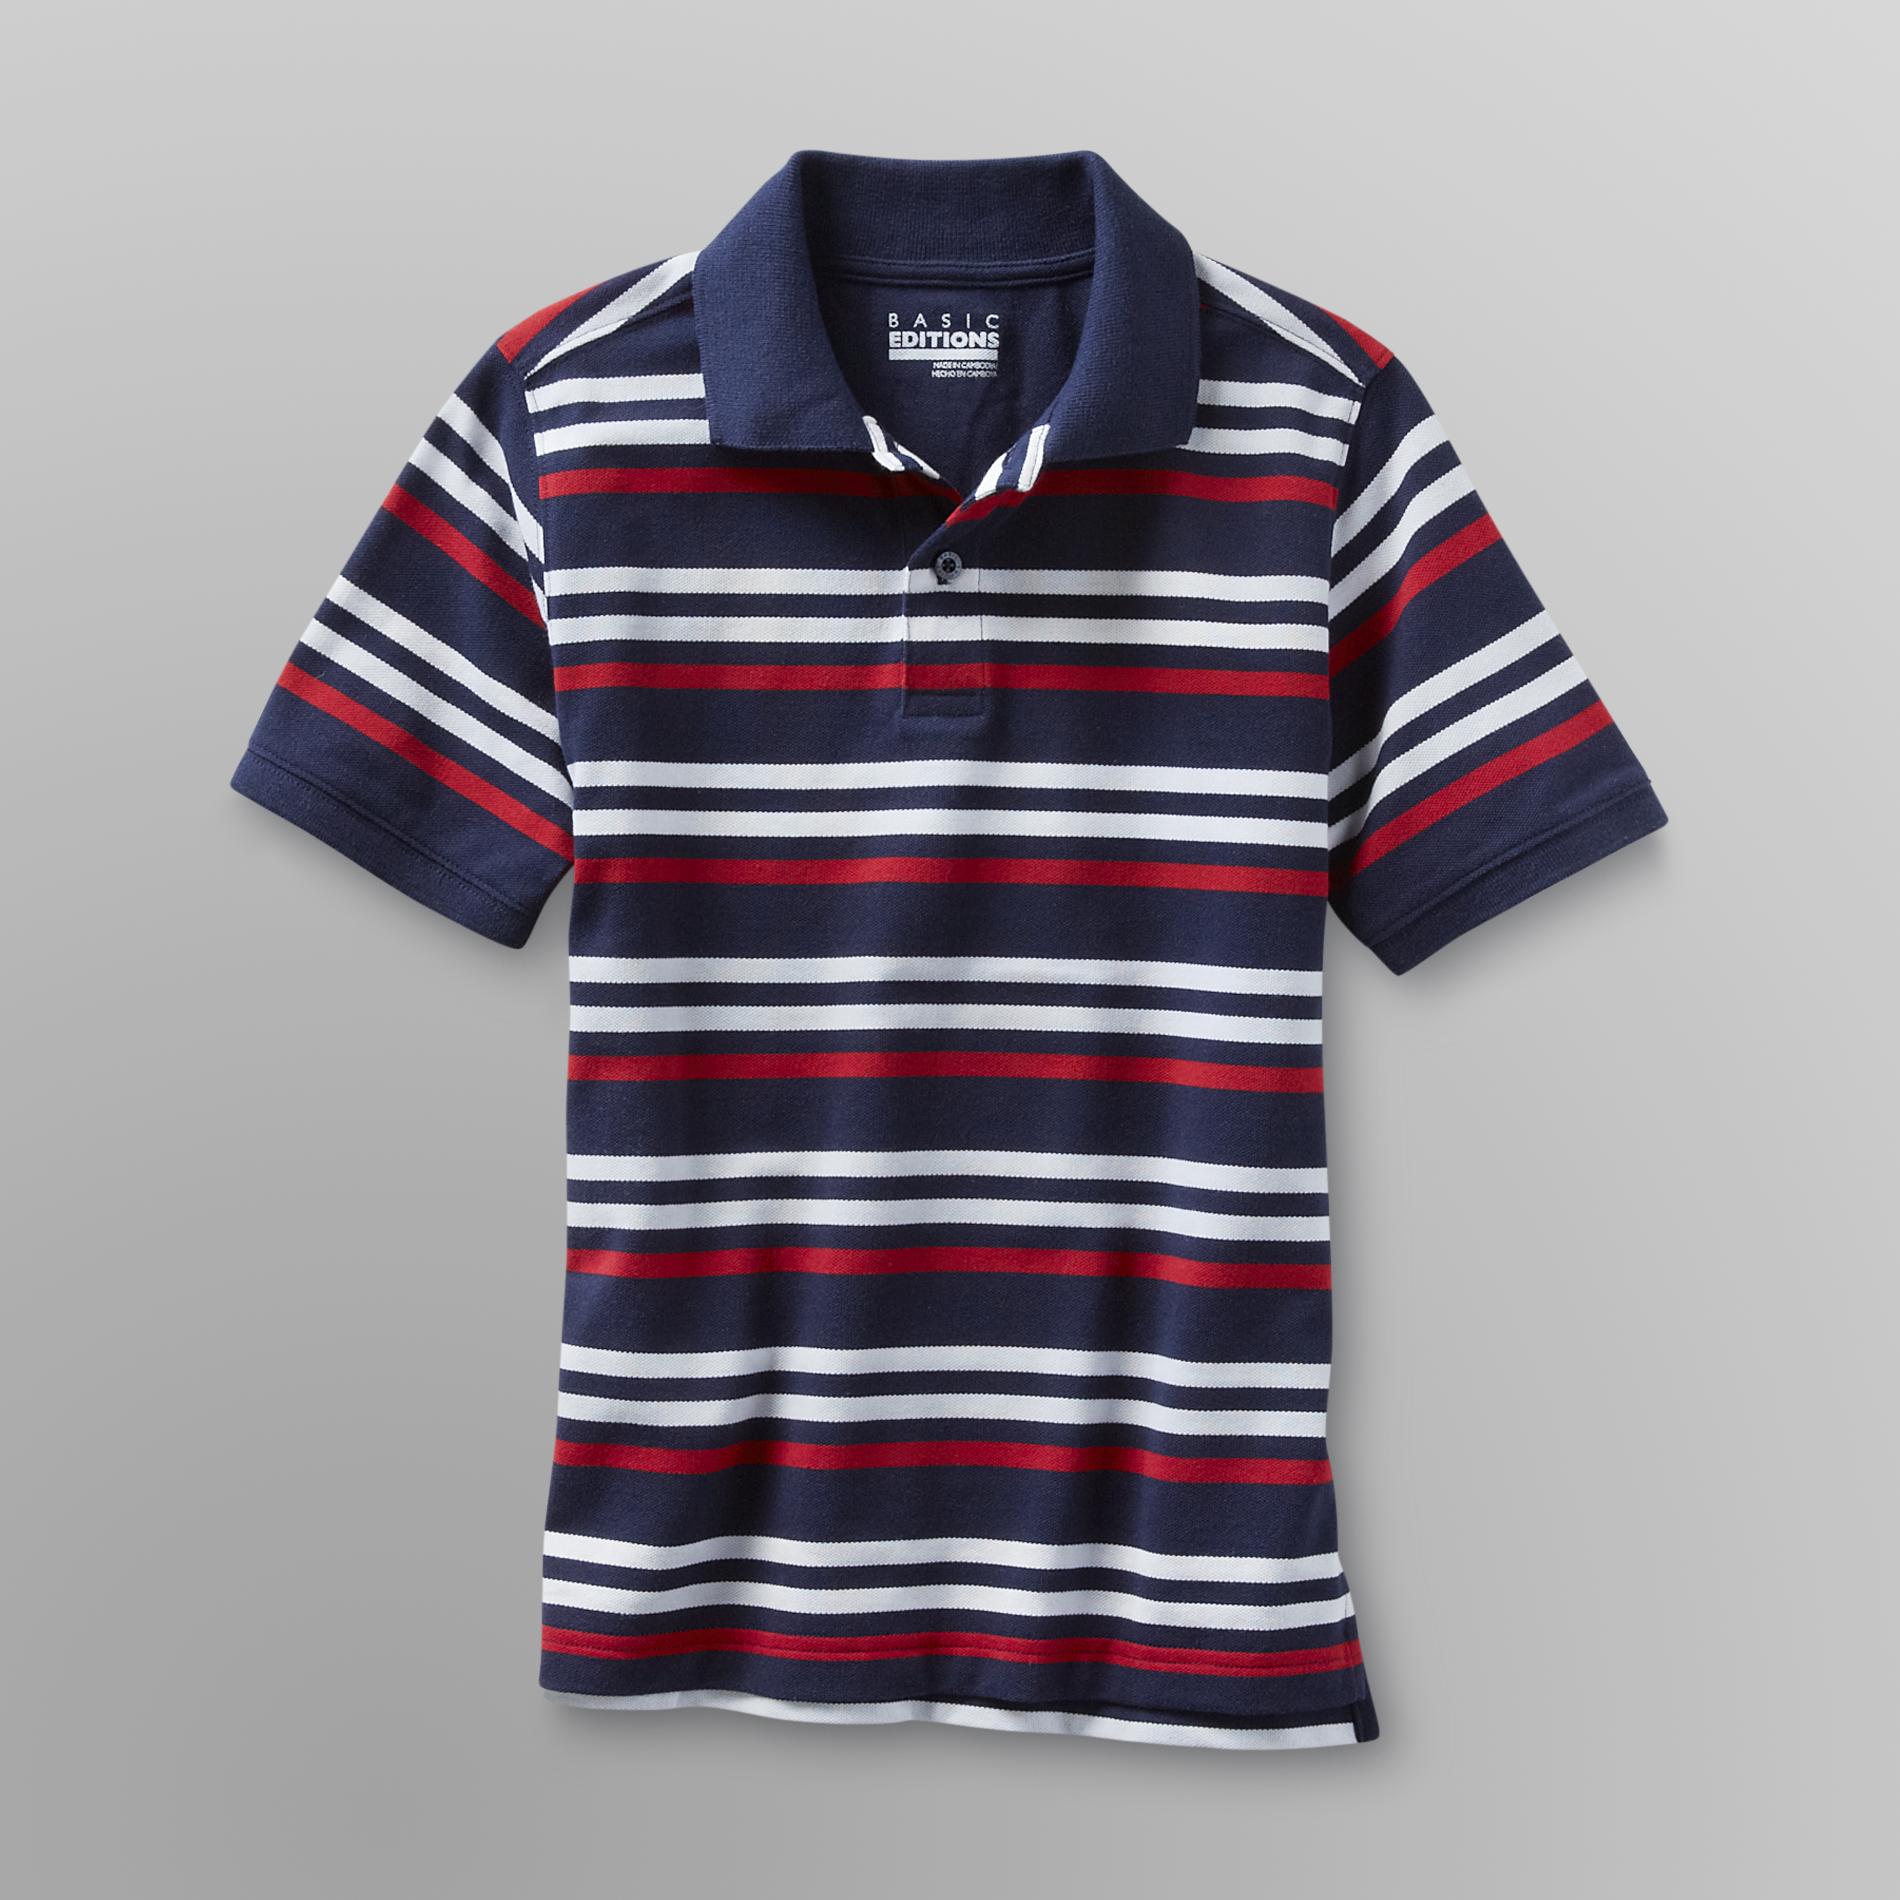 Basic Editions Boy's Mesh Polo Shirt - Striped